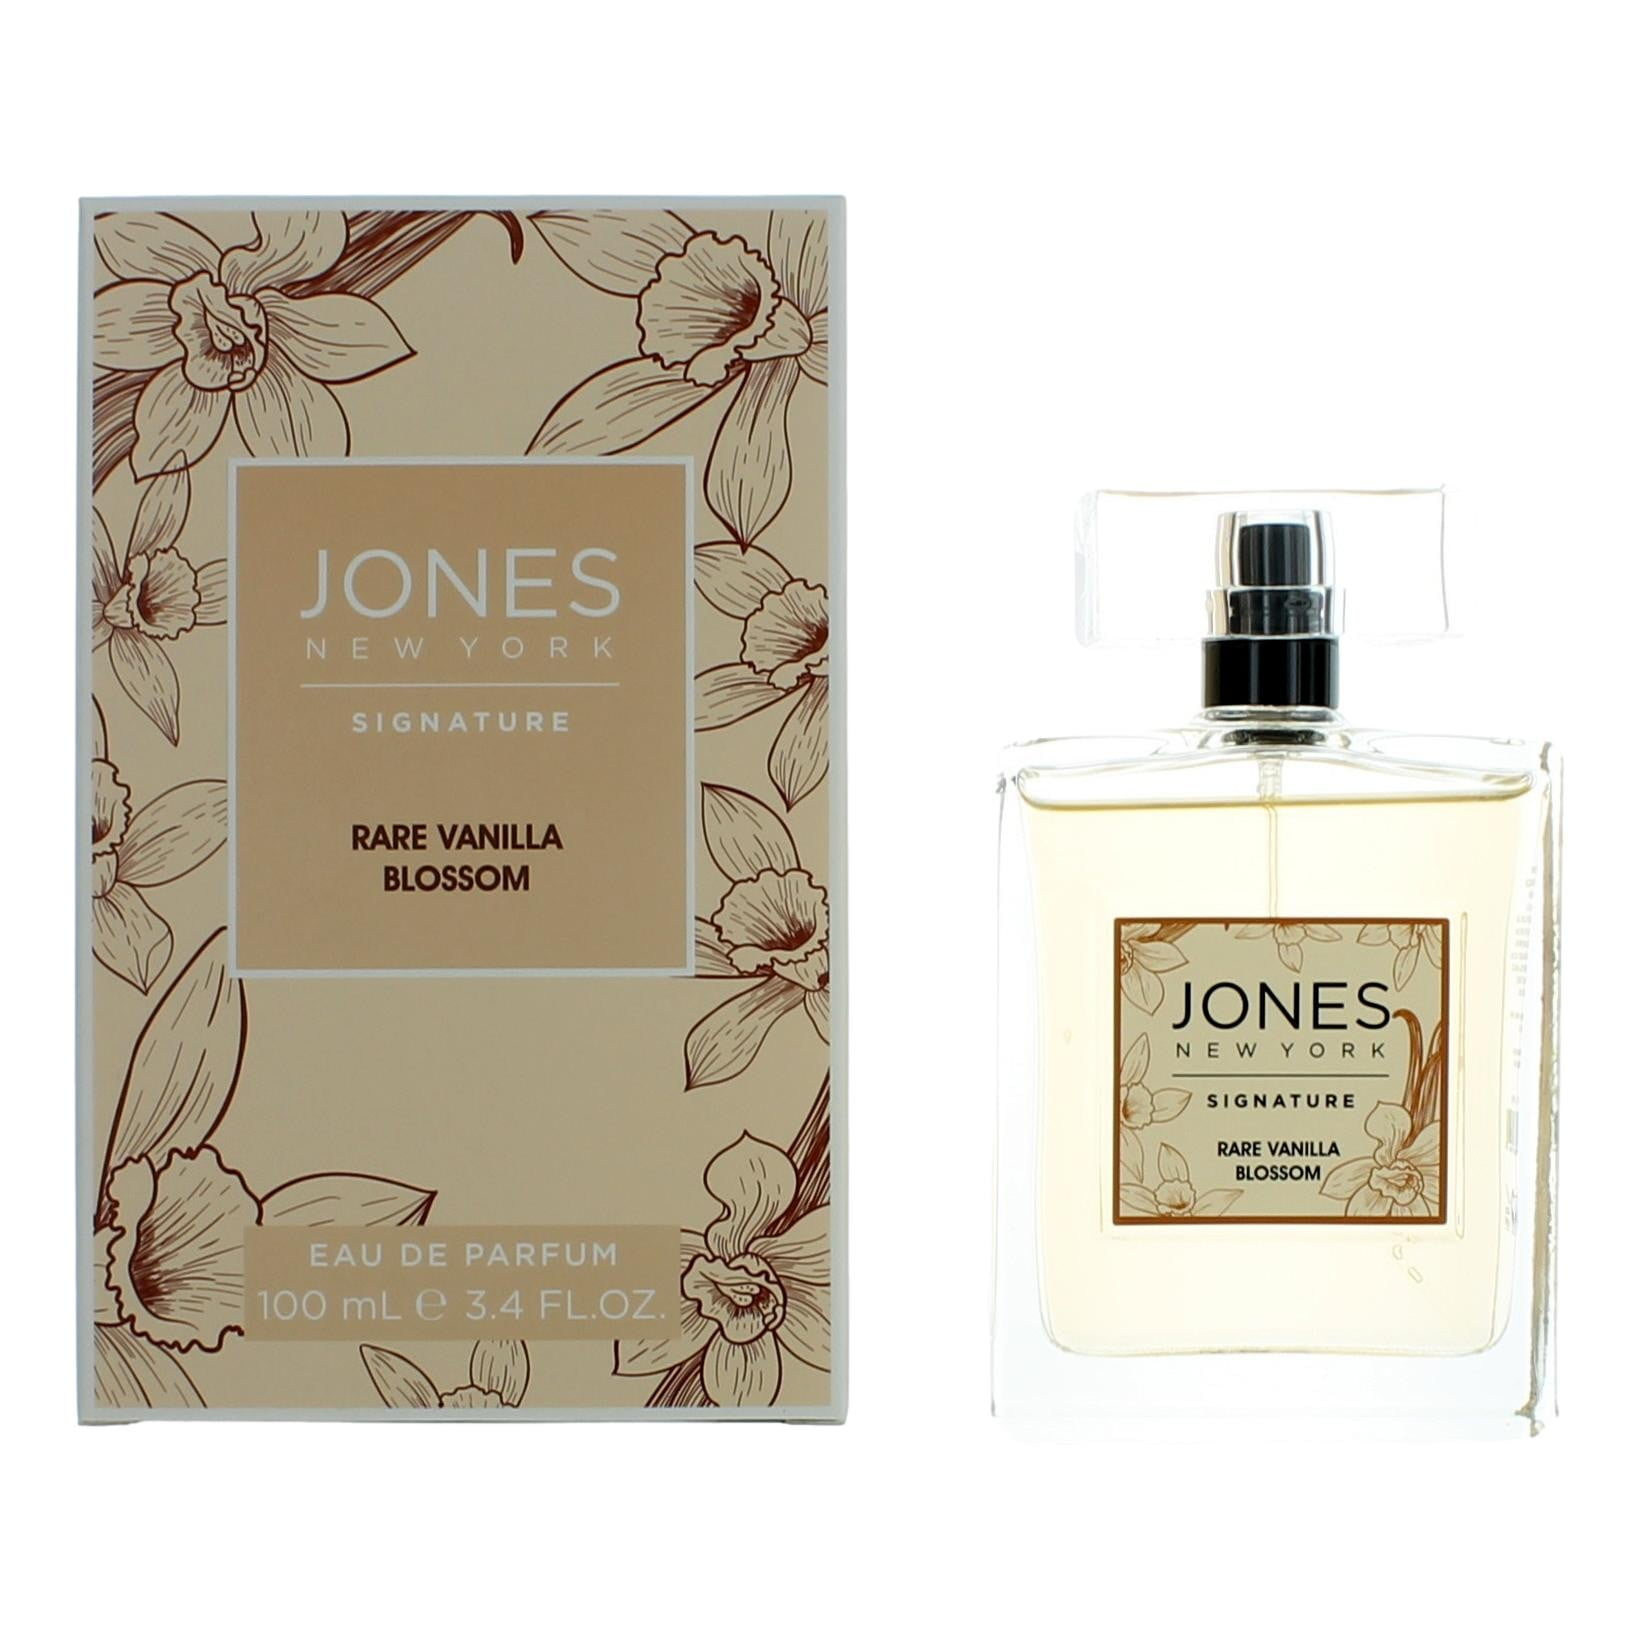 Jones New York Rare Vanilla Blossom Eau De Parfum Fragrance for Women, 3.4  fl oz / 100ml, 1 PC